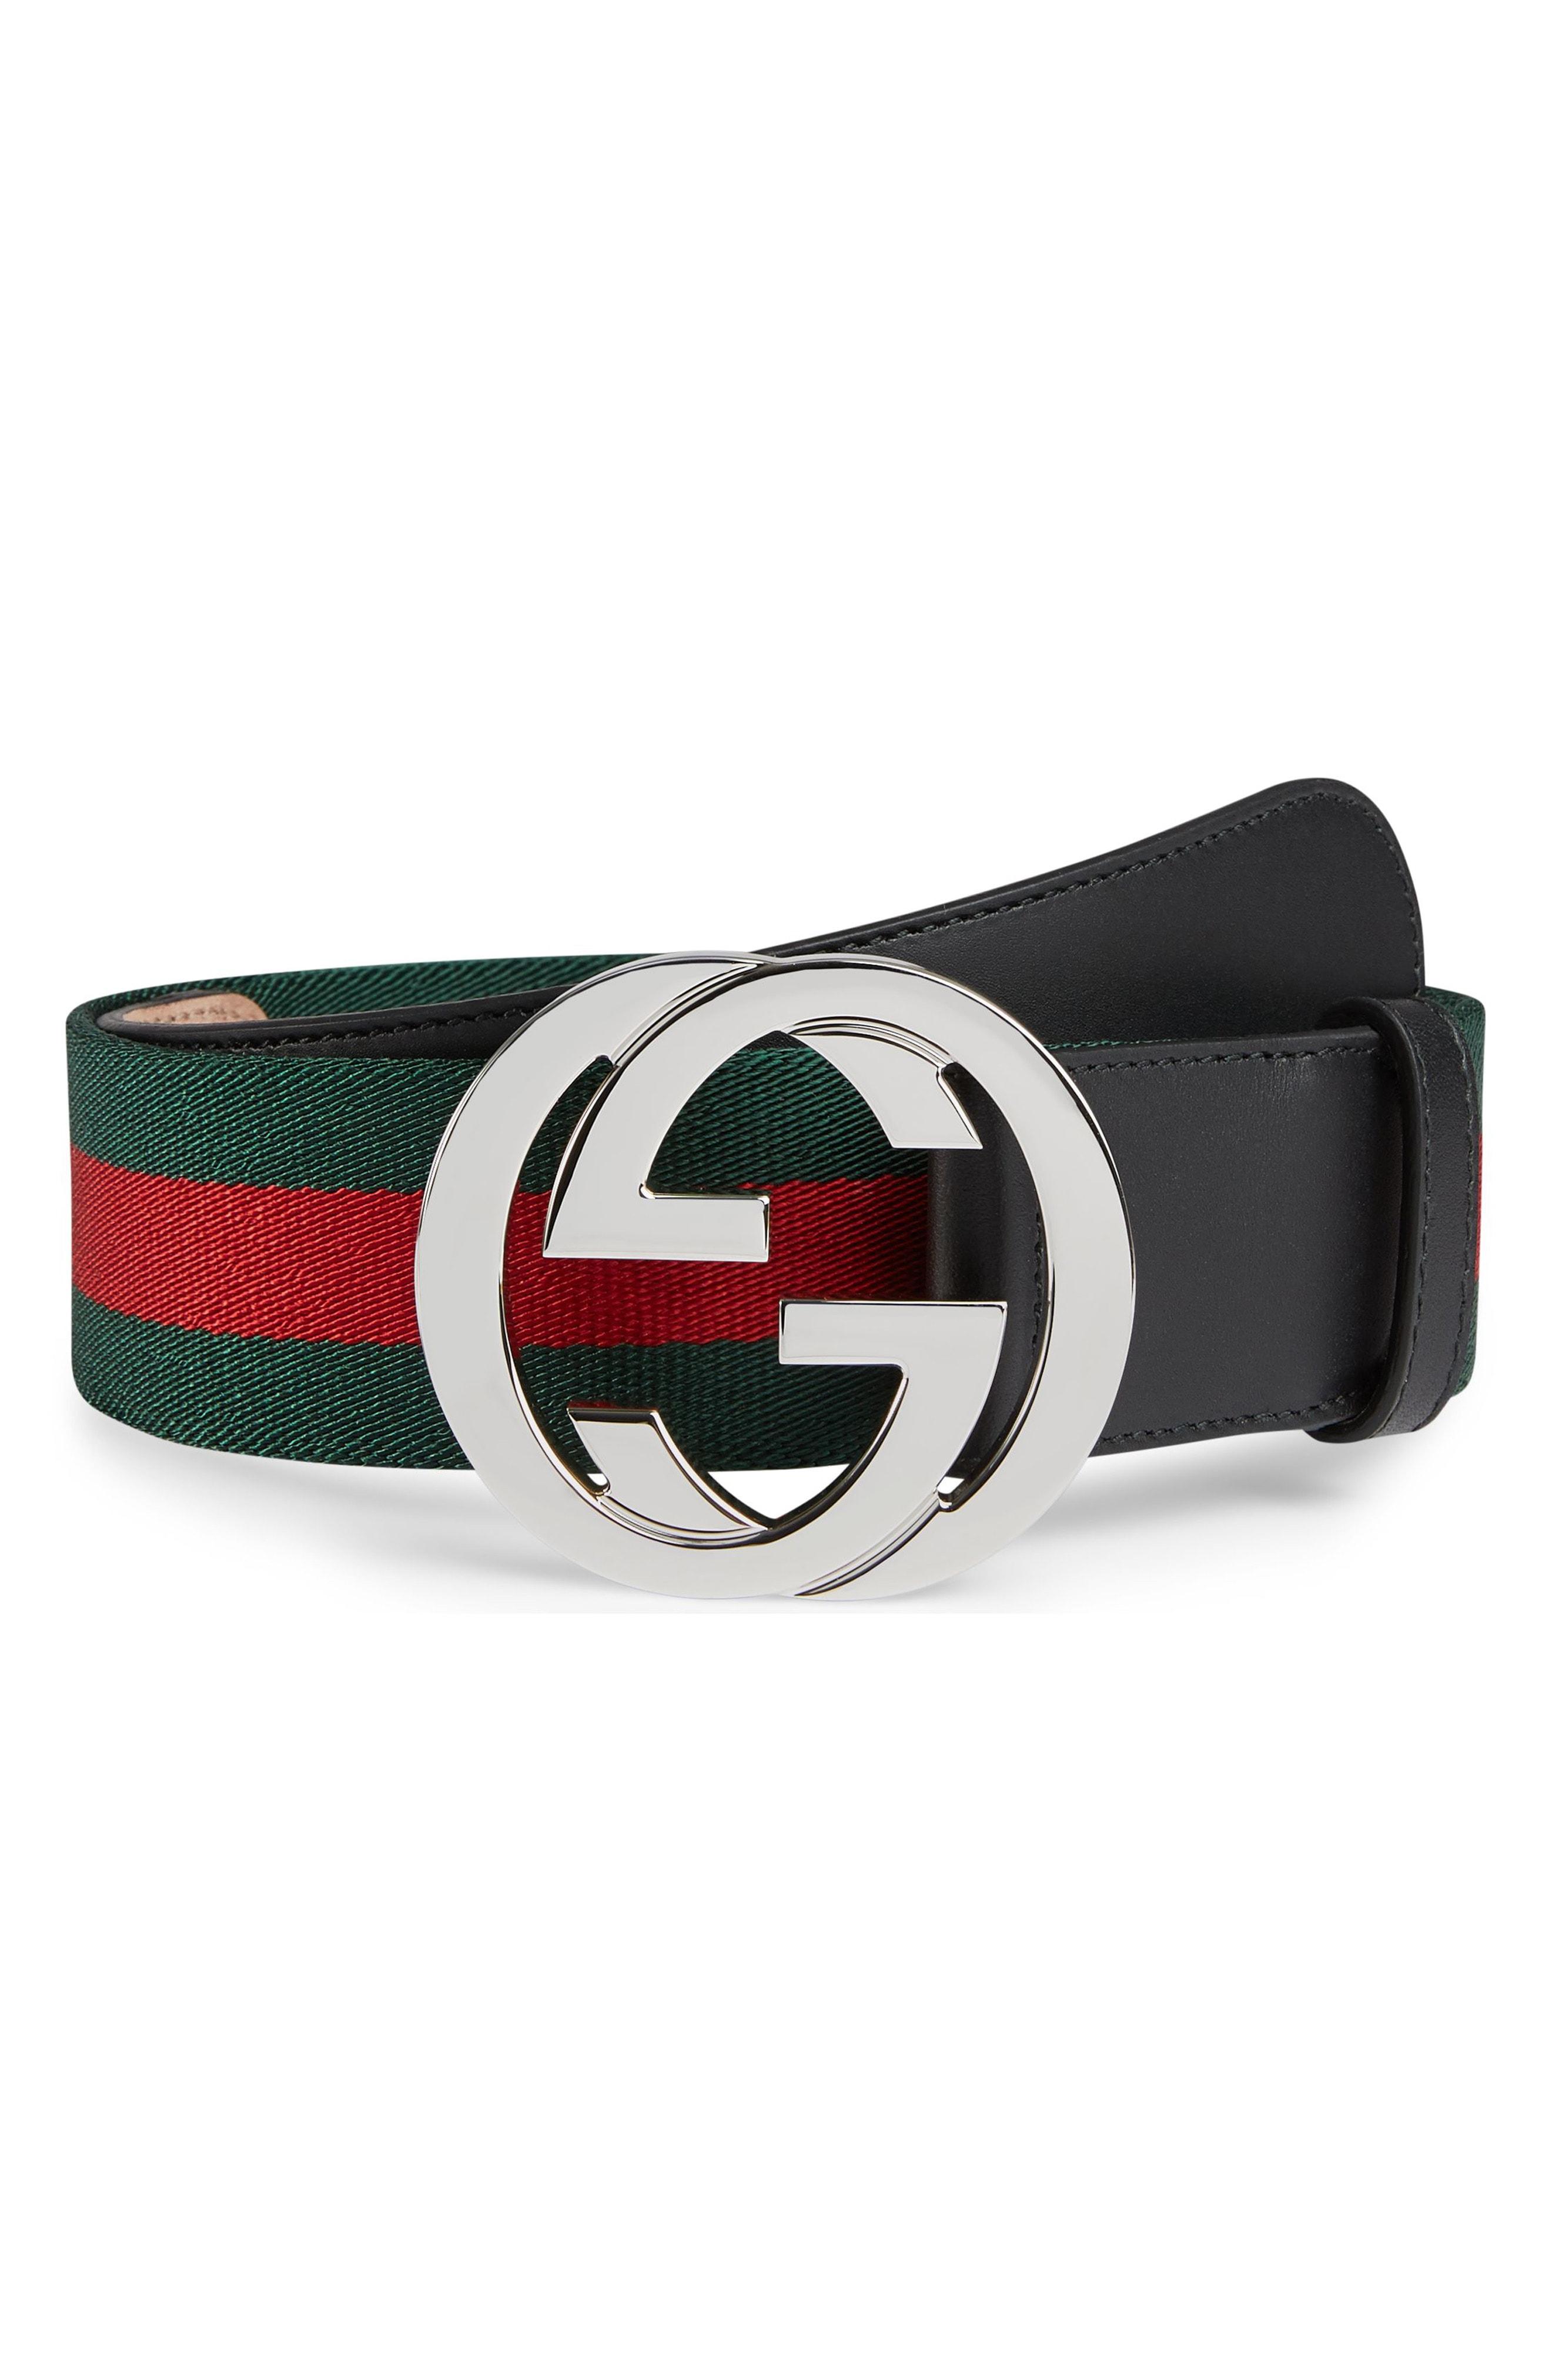 gucci belt black green red